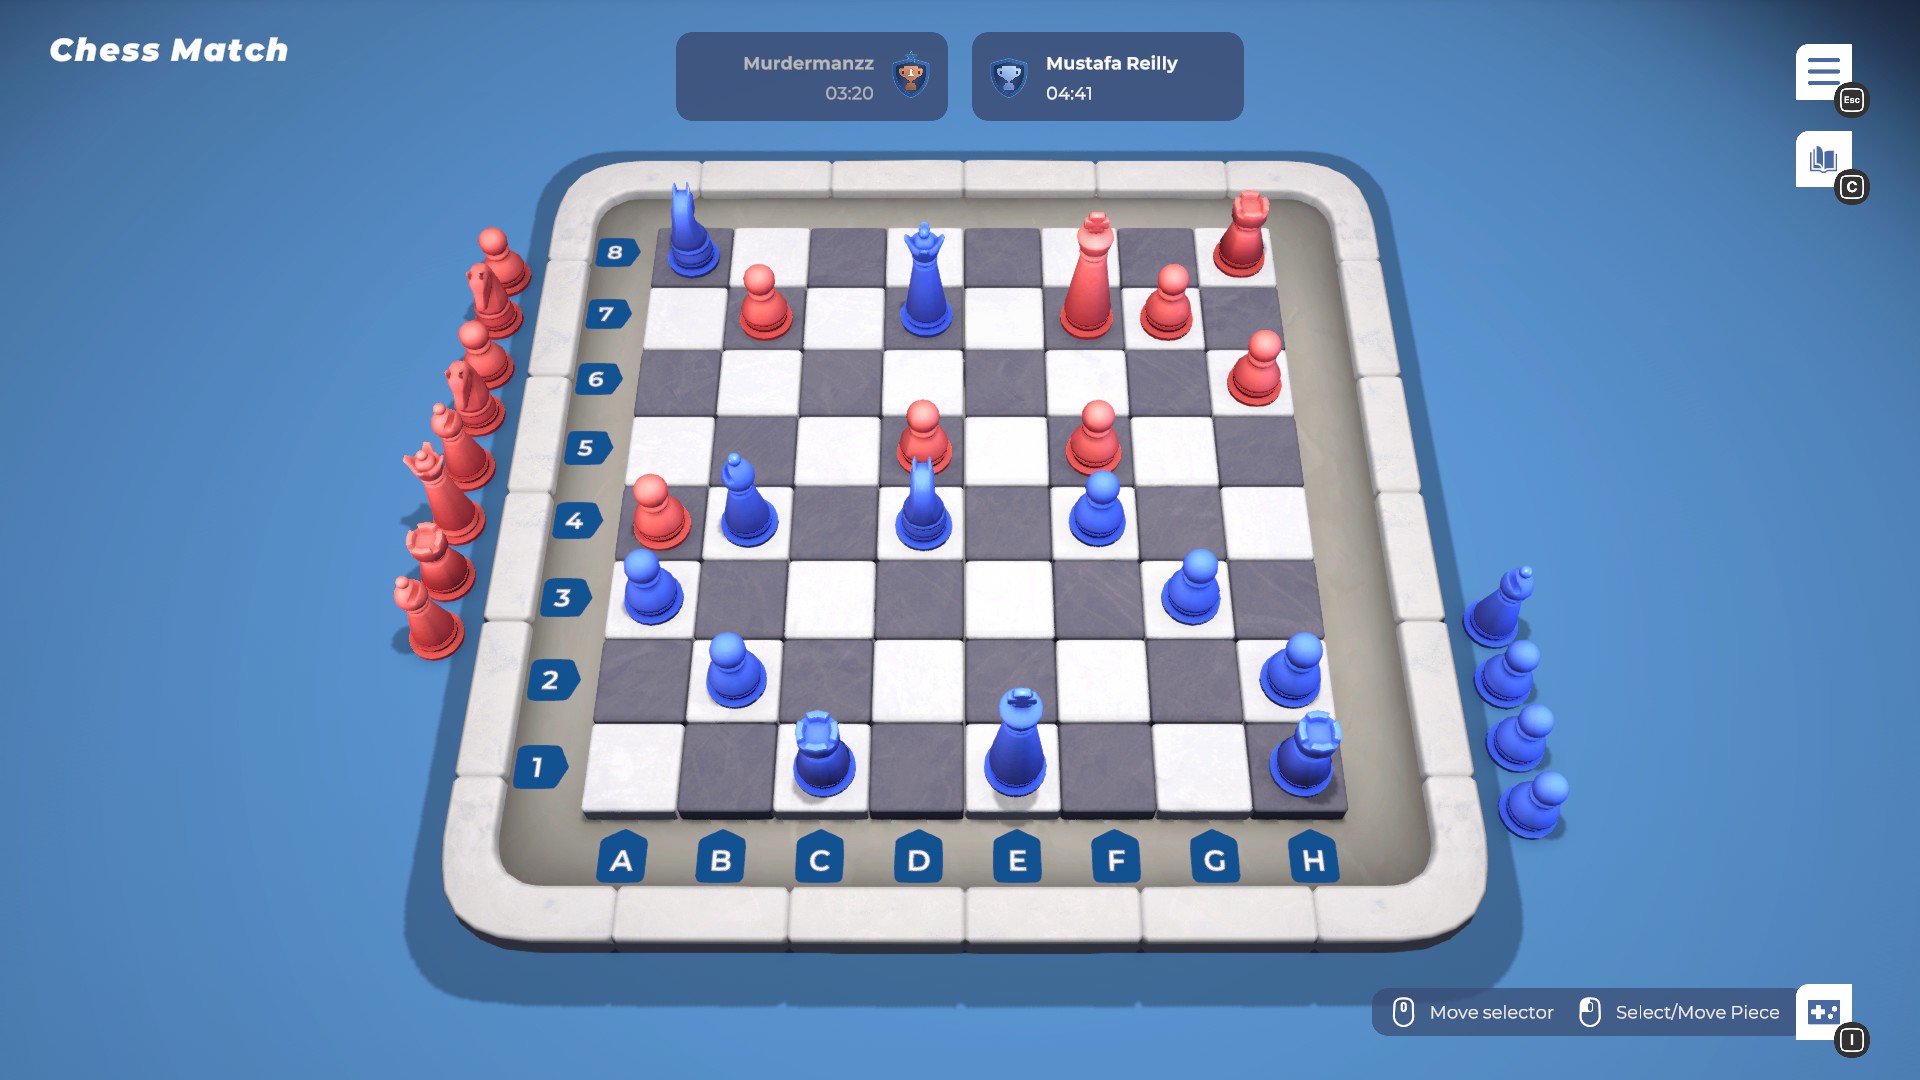 Chess Universe+ - Metacritic